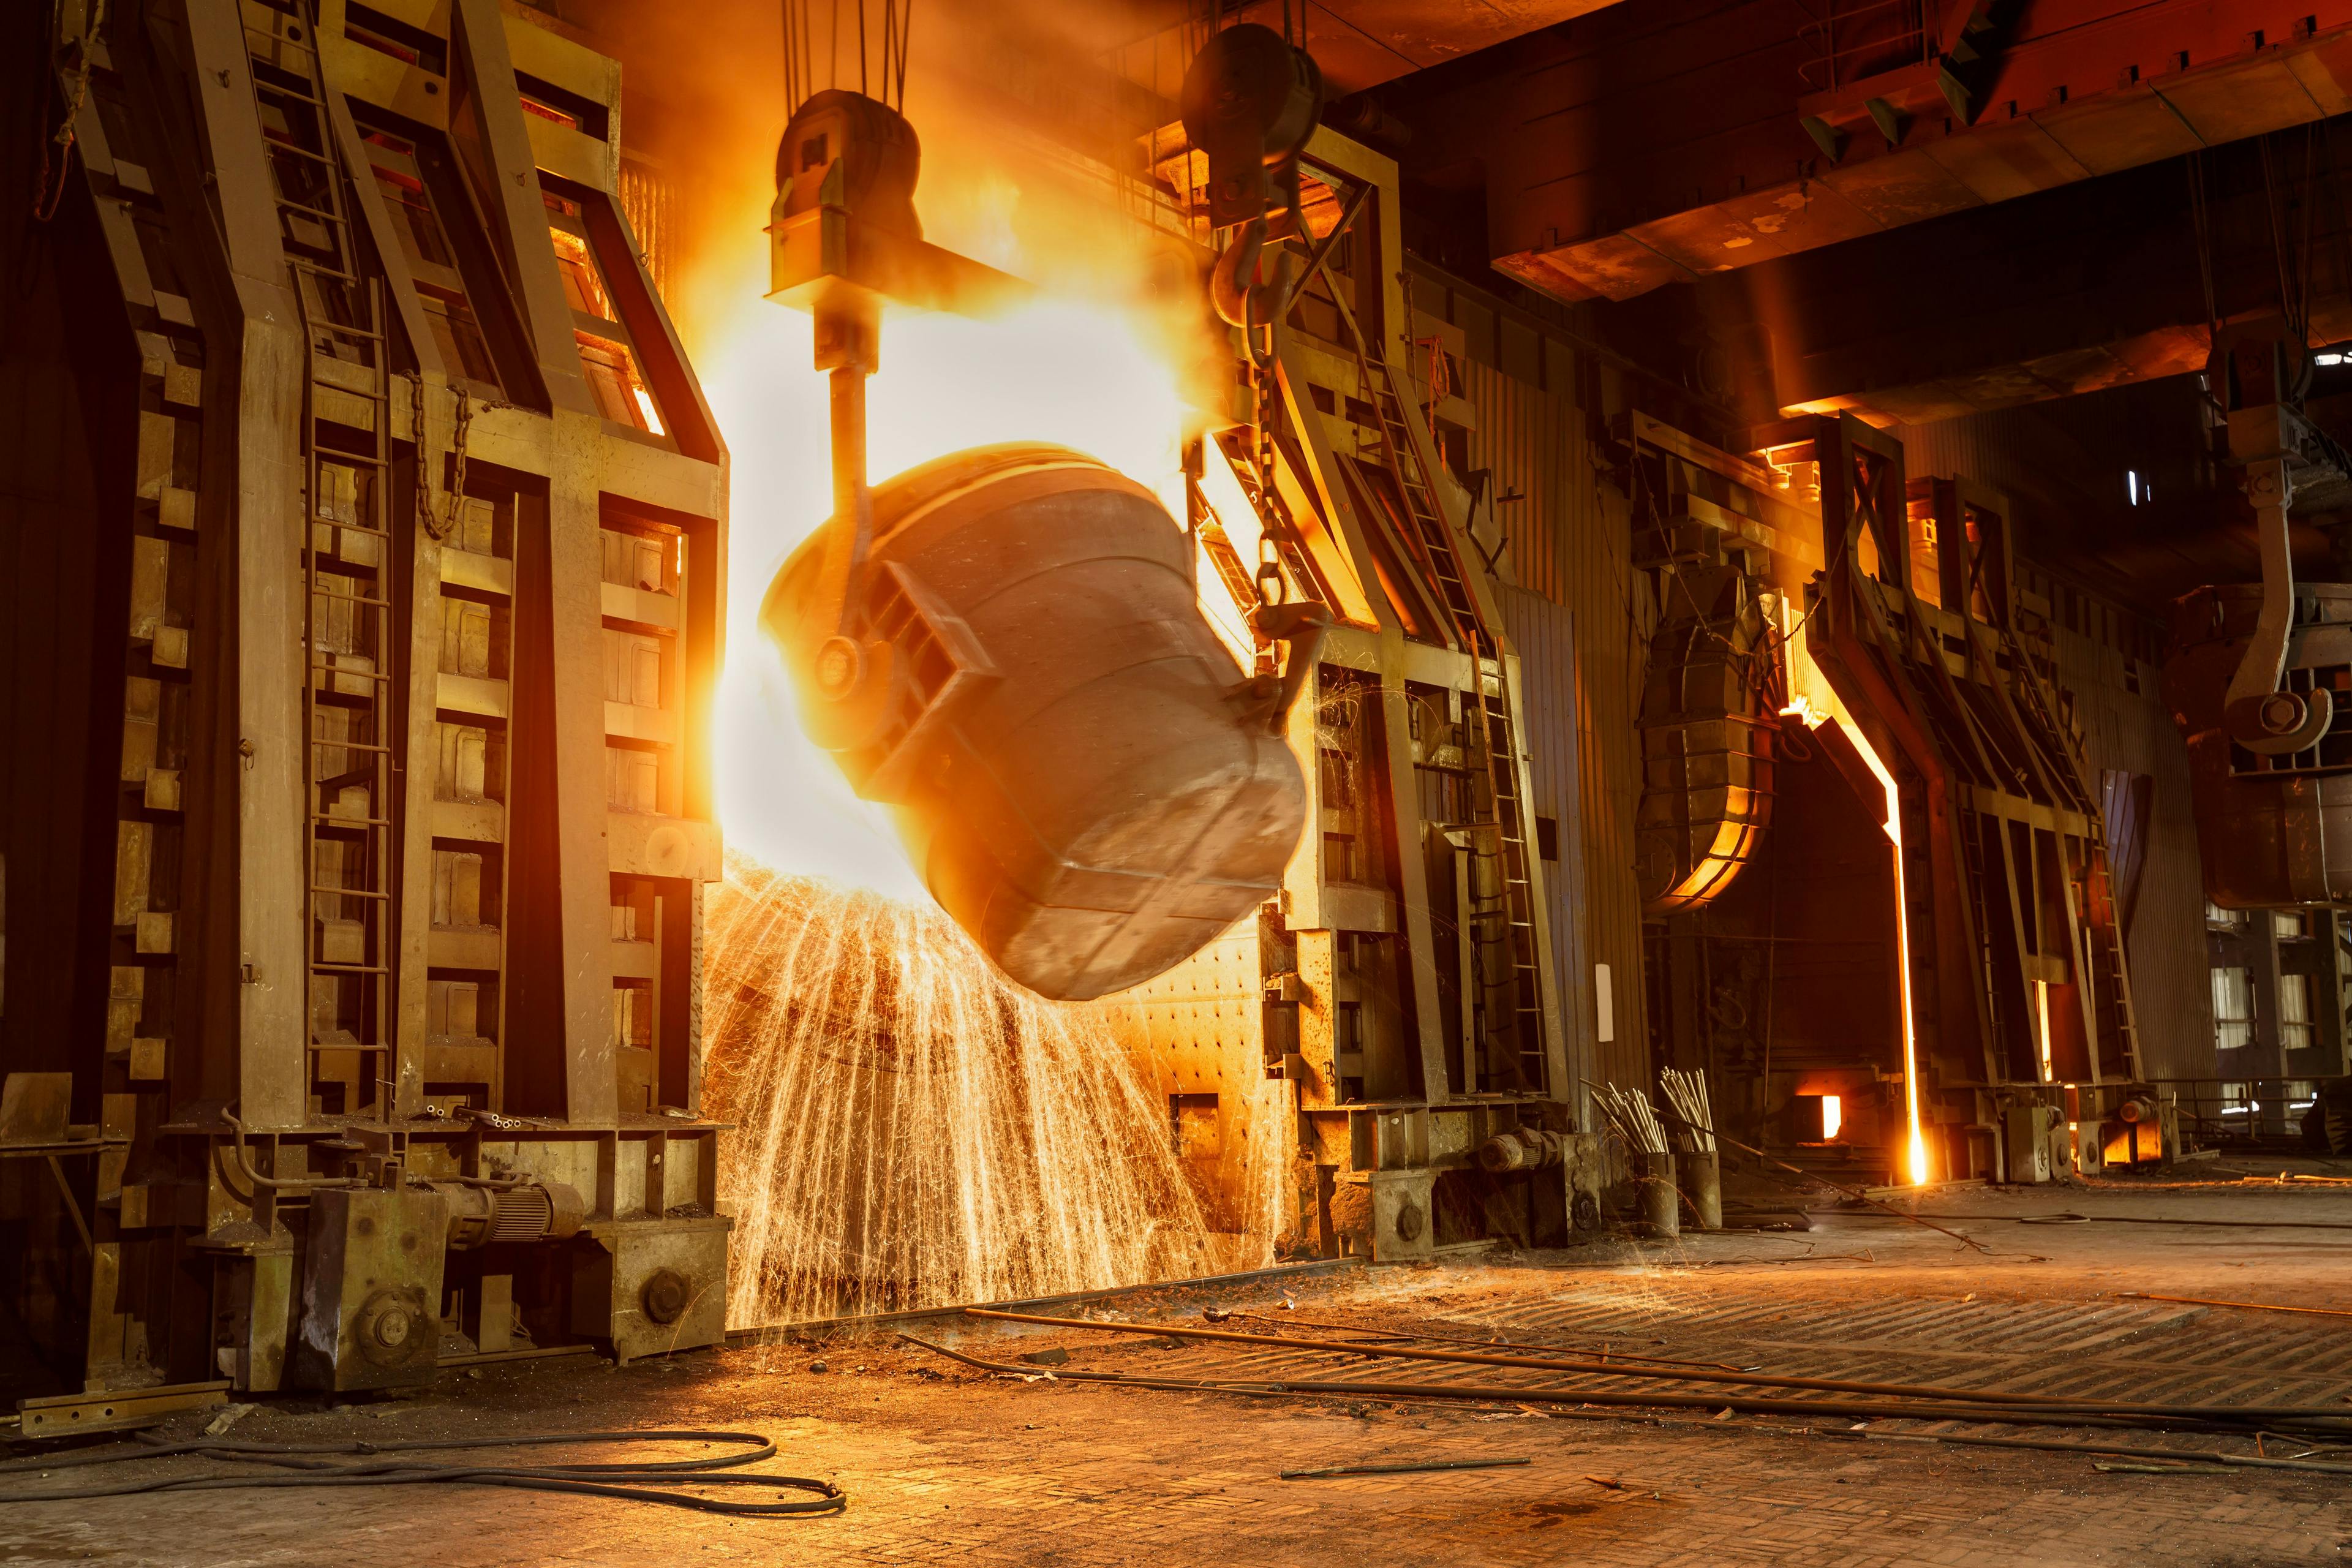 Metal smelting furnace in steel mills | Image Credit: © ABCDstock - stock.adobe.com